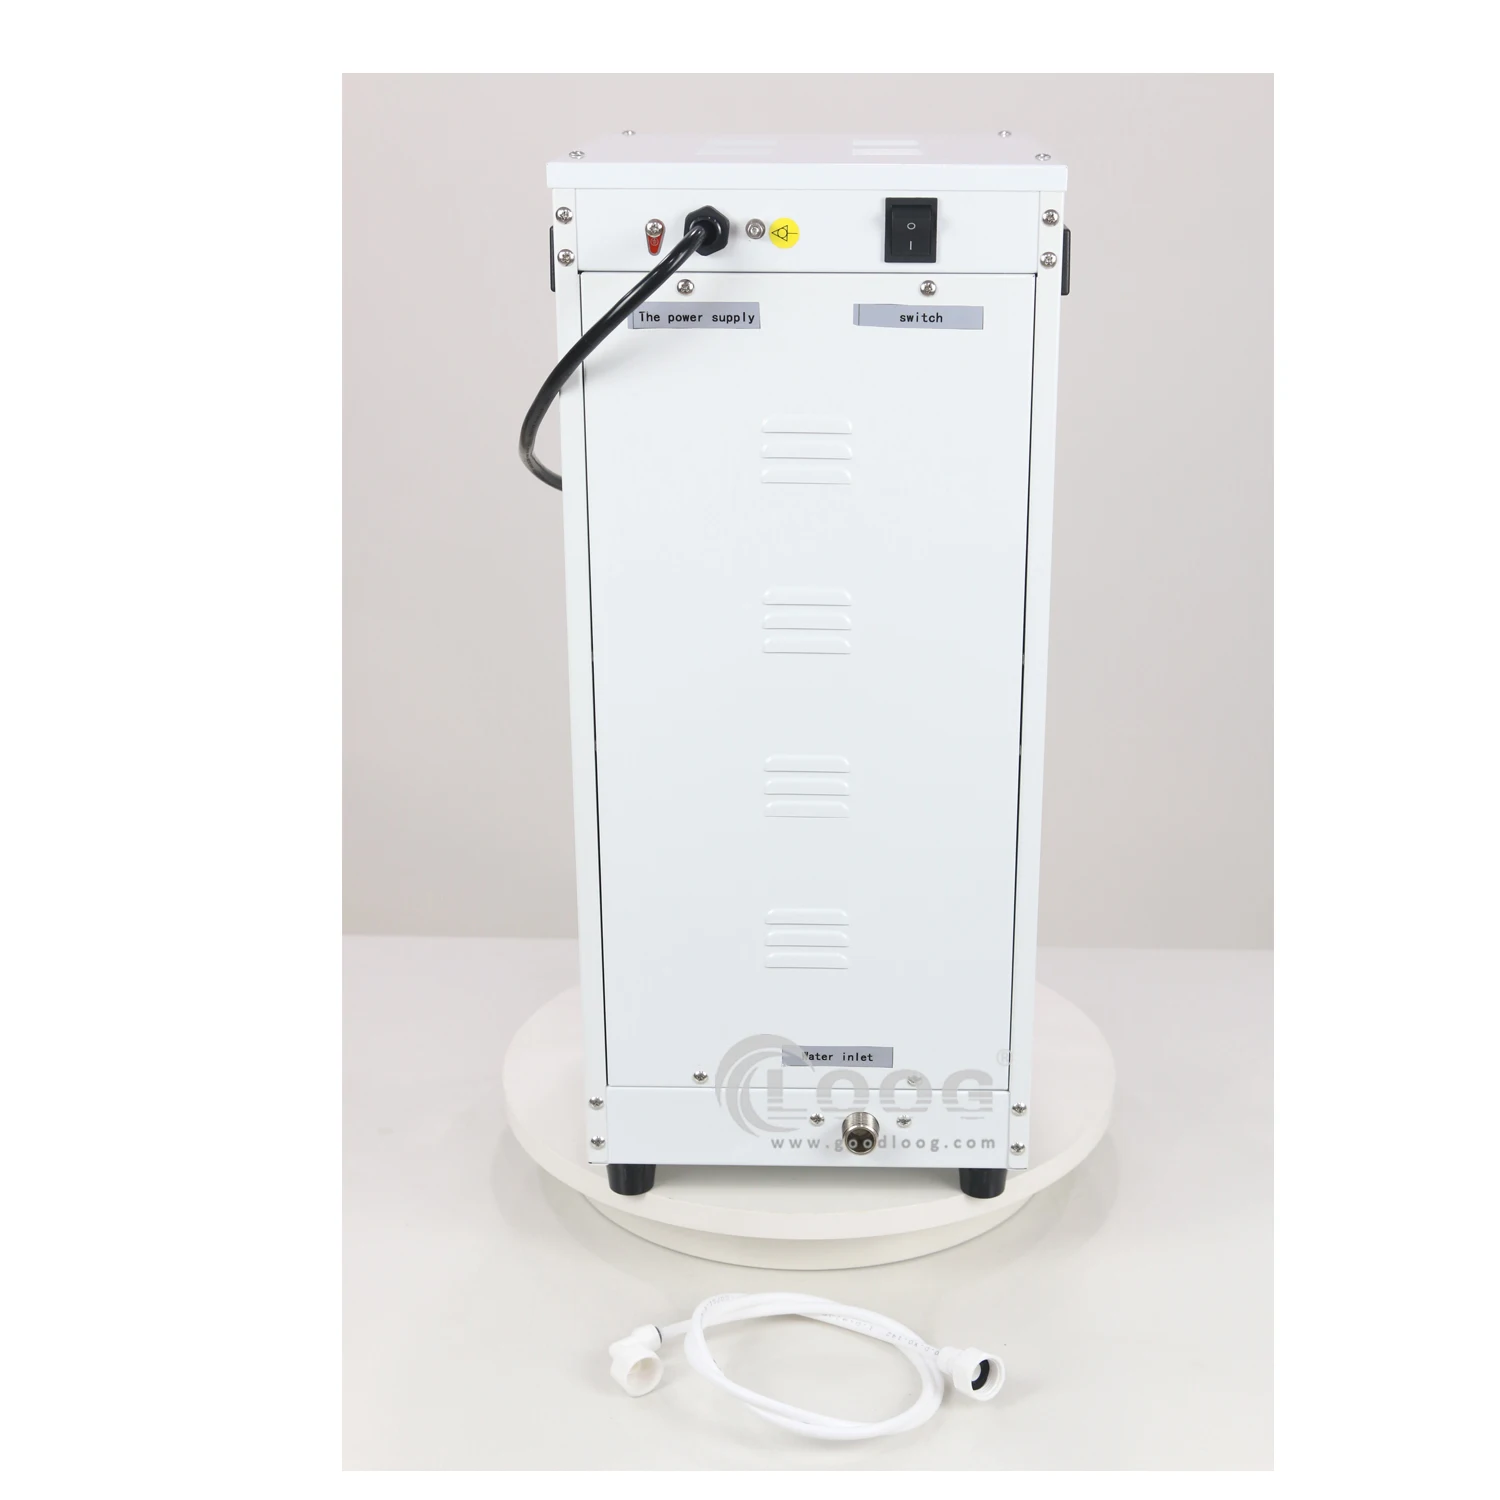 Hot Water Machine Instant Commercial Hot Water Dispenser - GoodLoog